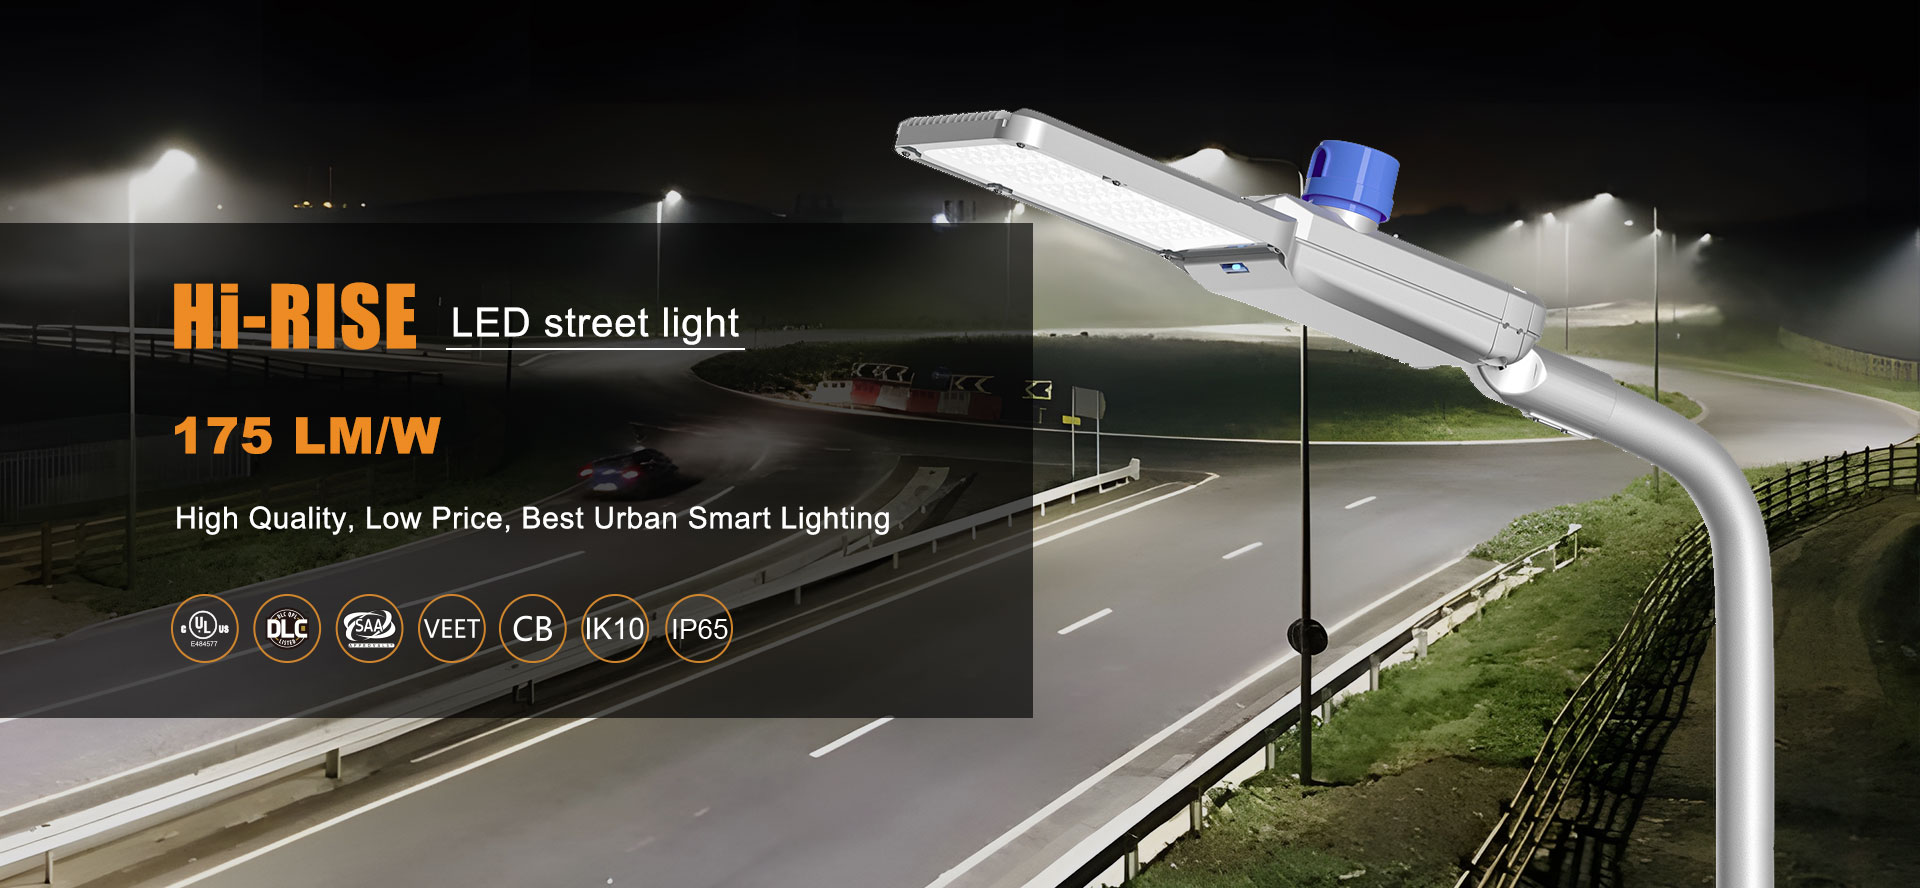 Hi-Rise LED street lights